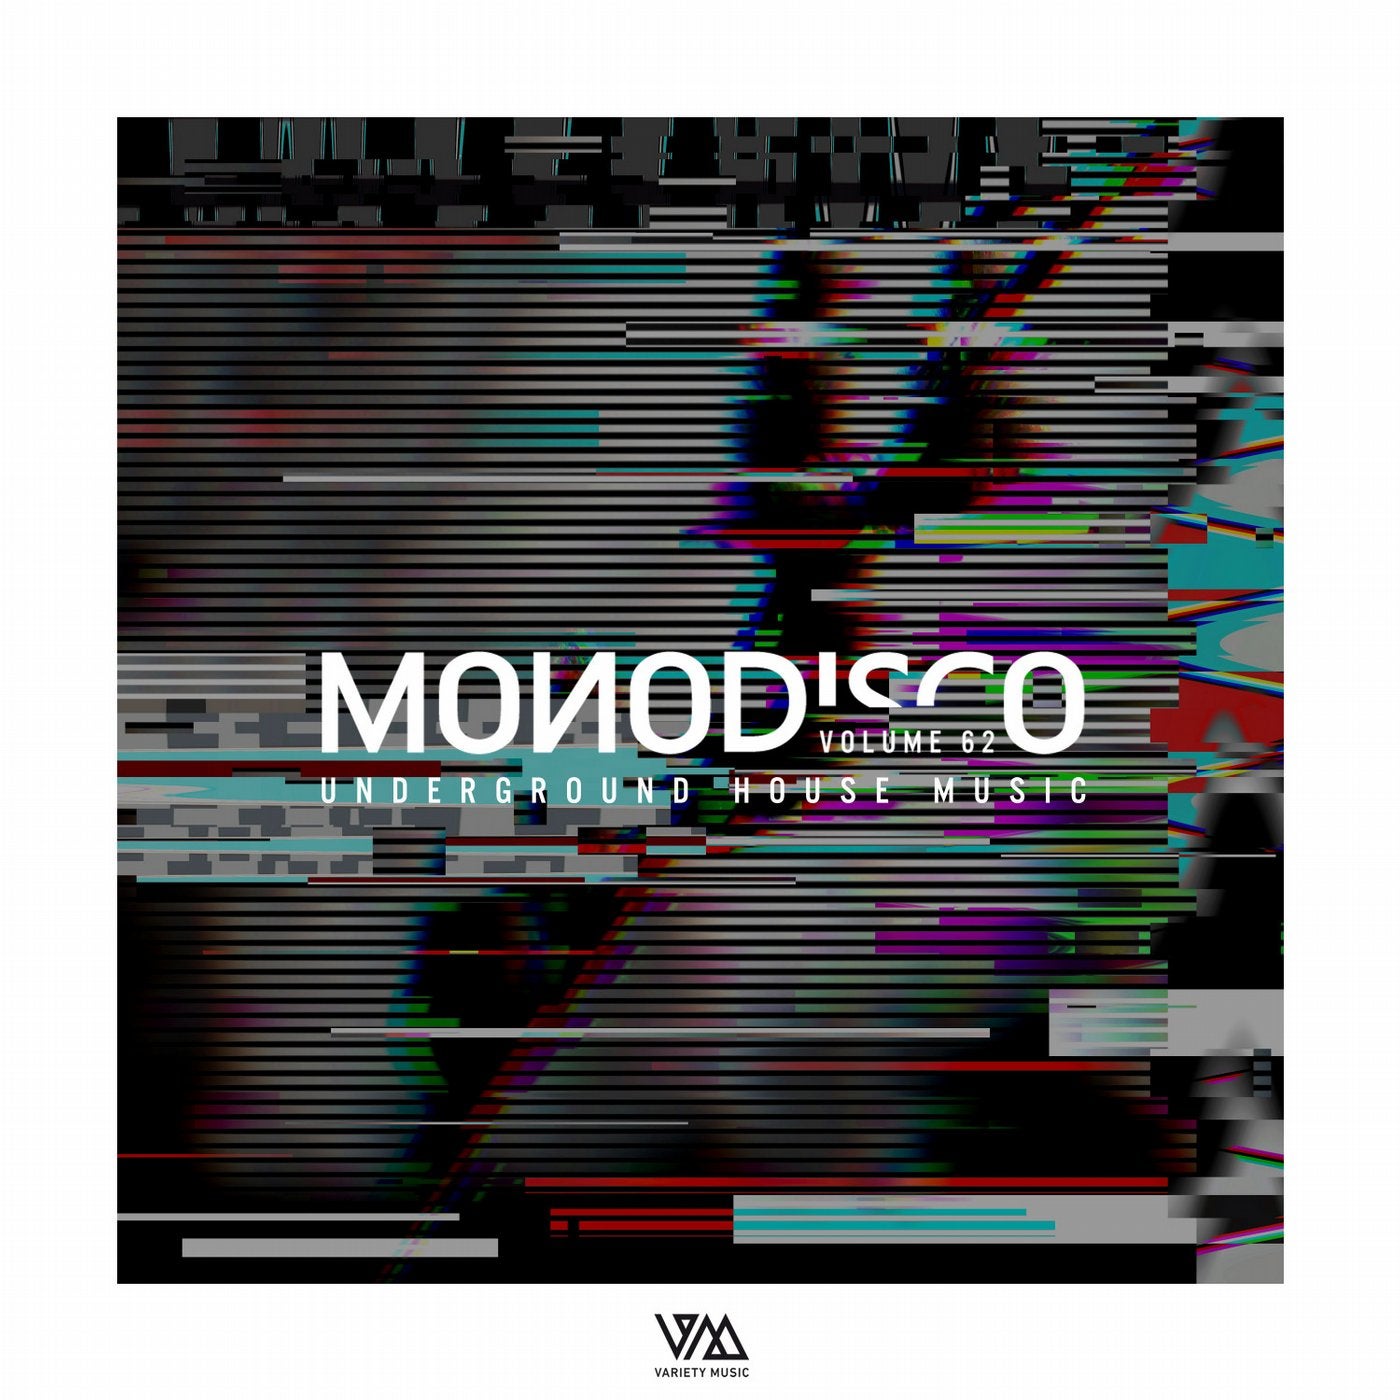 Monodisco Vol. 62